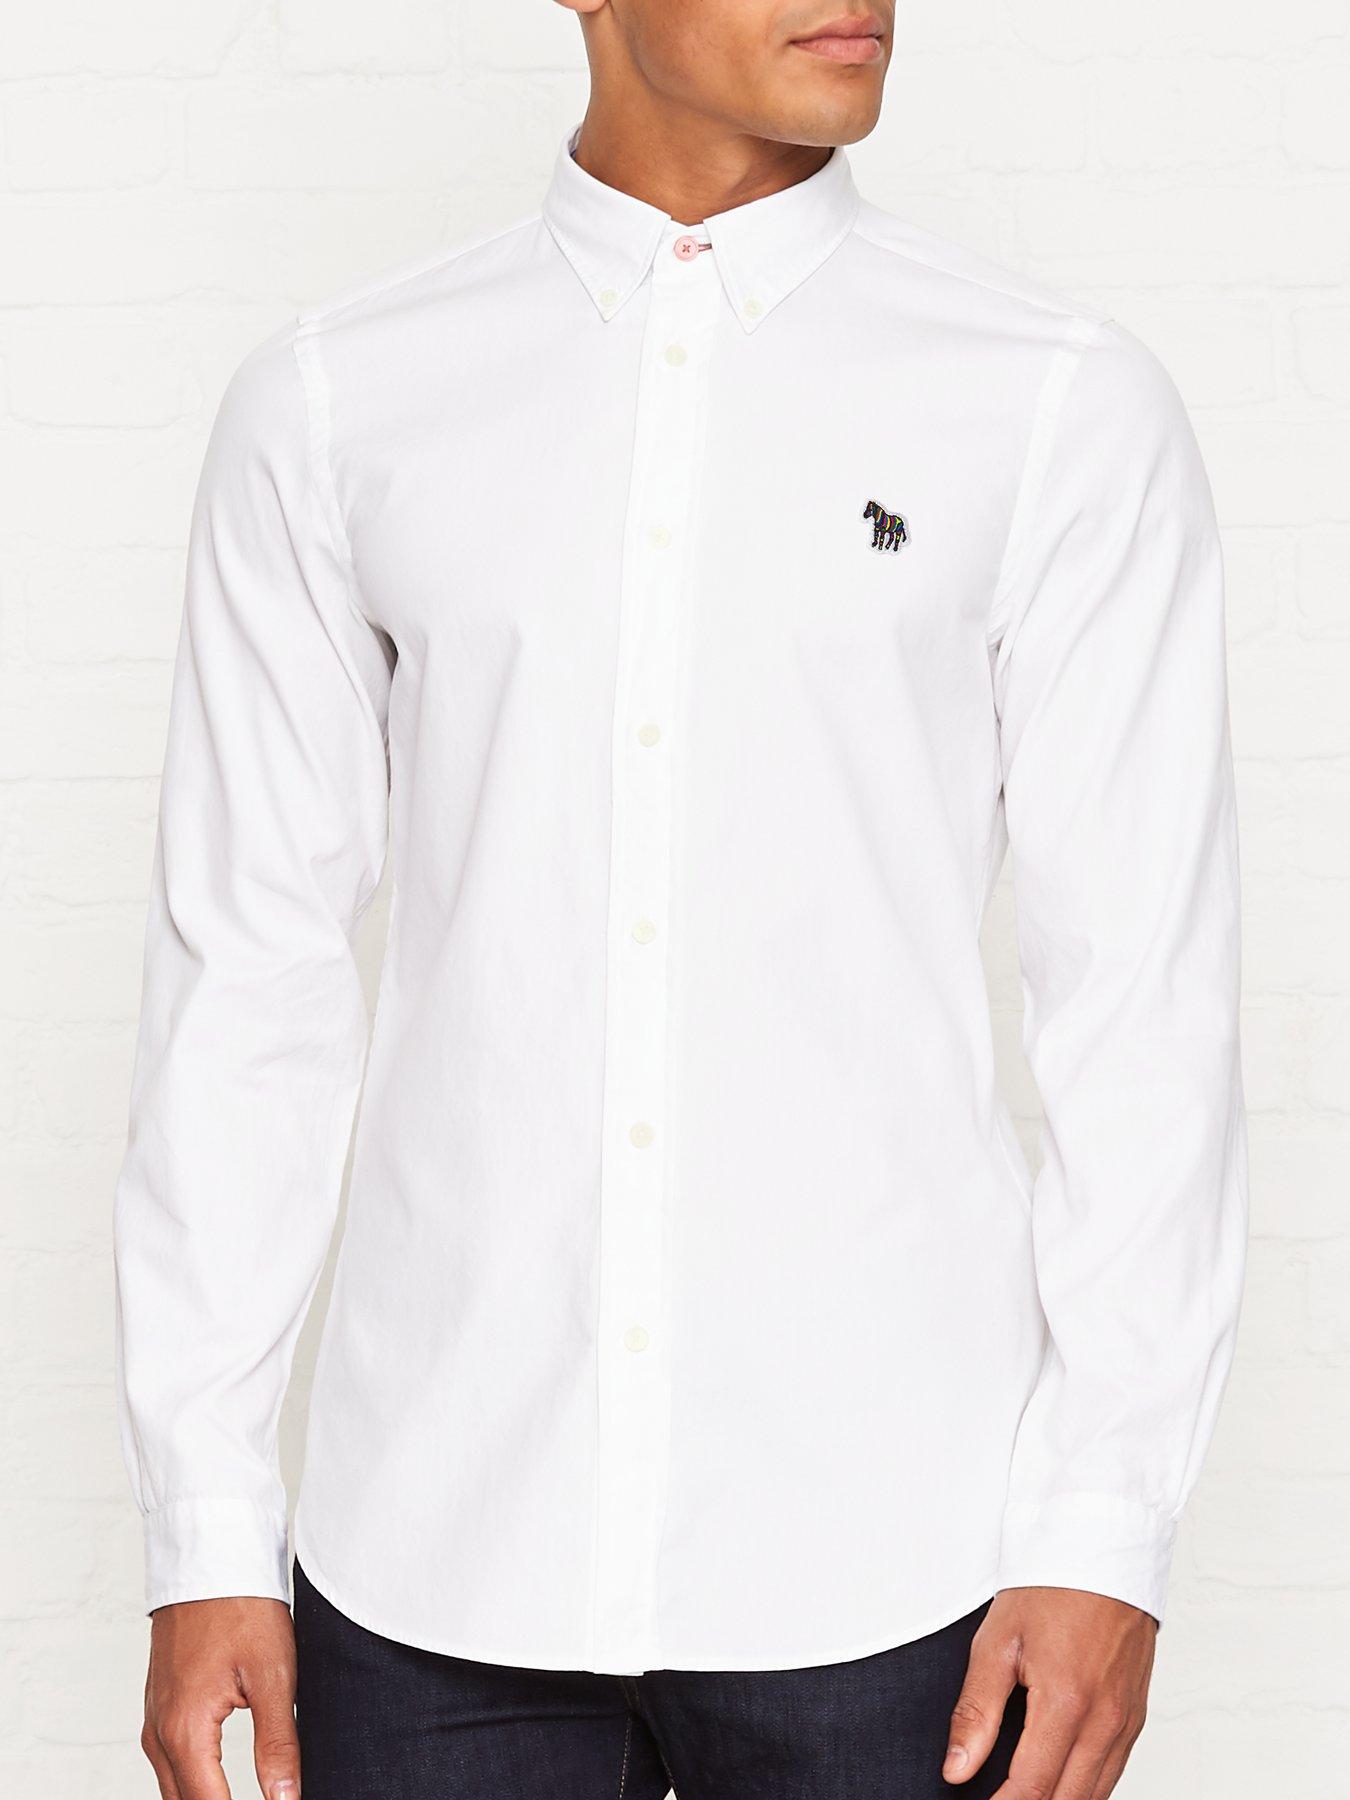 Paul Smith Men's T-Shirt M White 100% Cotton